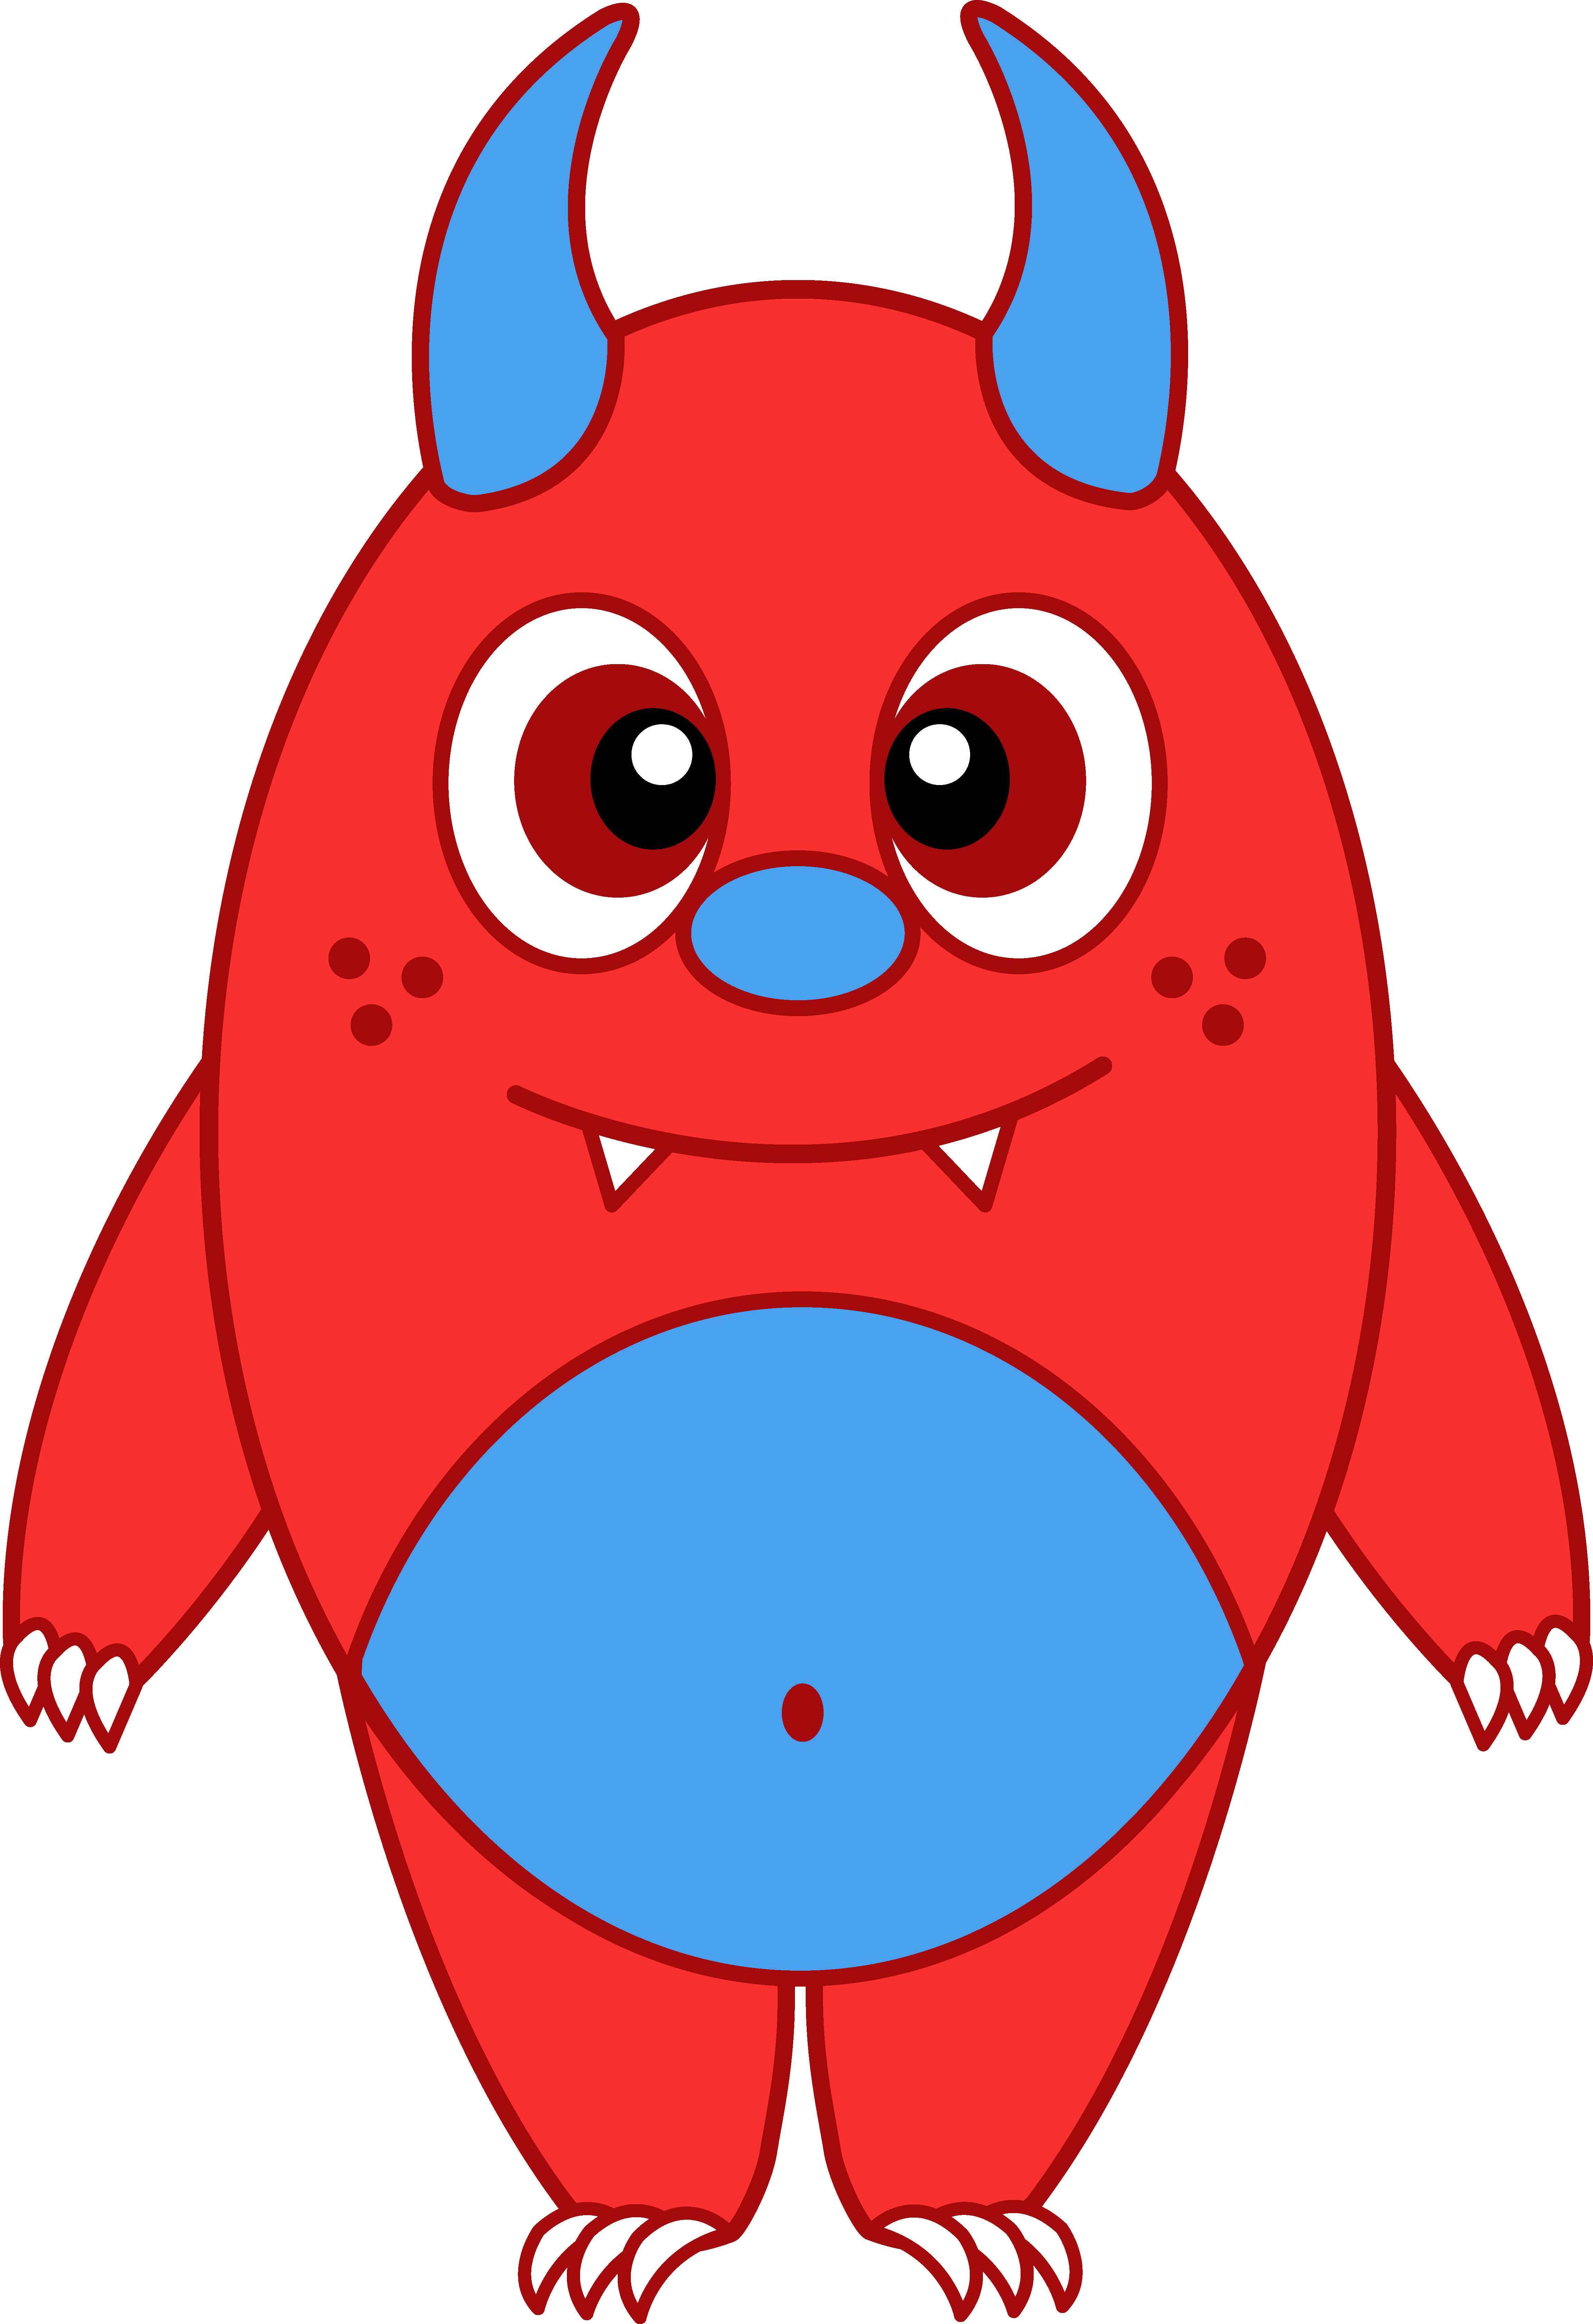 Inspiring Monsters Clip Art Medium Size Inspiring Monsters - Cute Red Monster (4611x6729)